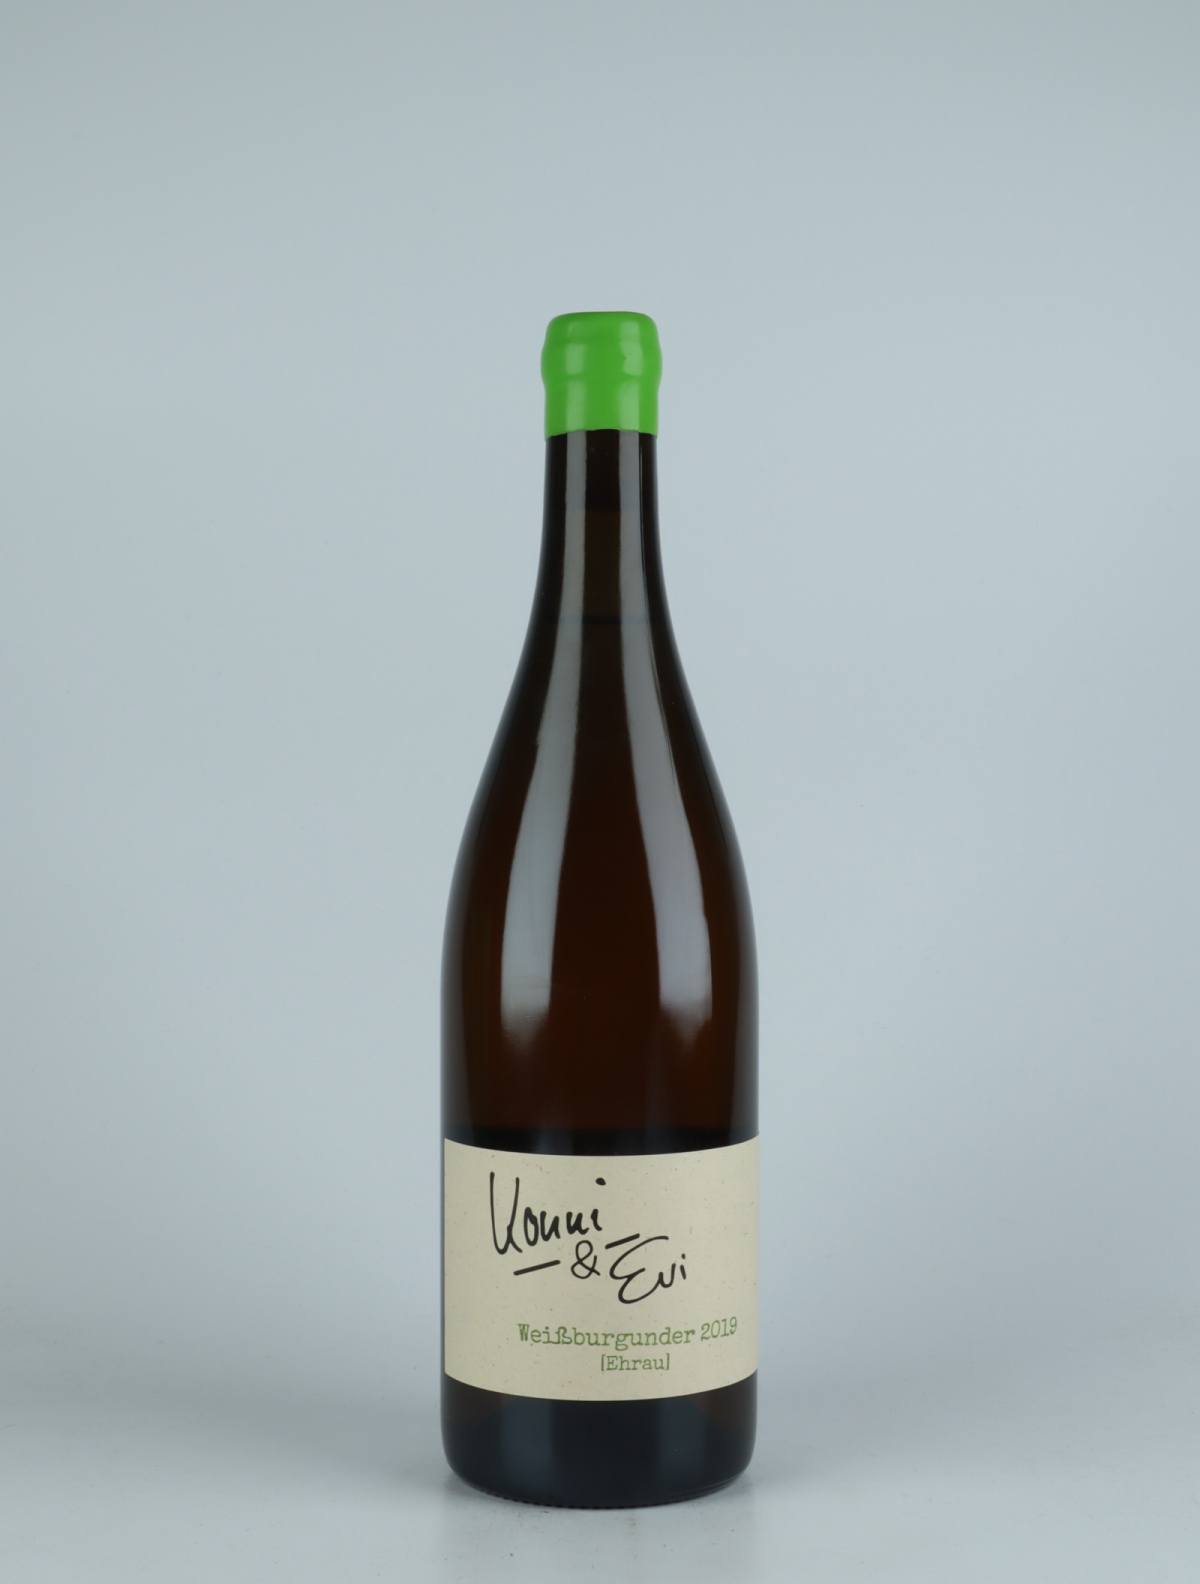 A bottle 2019 Weissburgunder Ehrau White wine from Konni & Evi, Saale-Unstrut in Germany